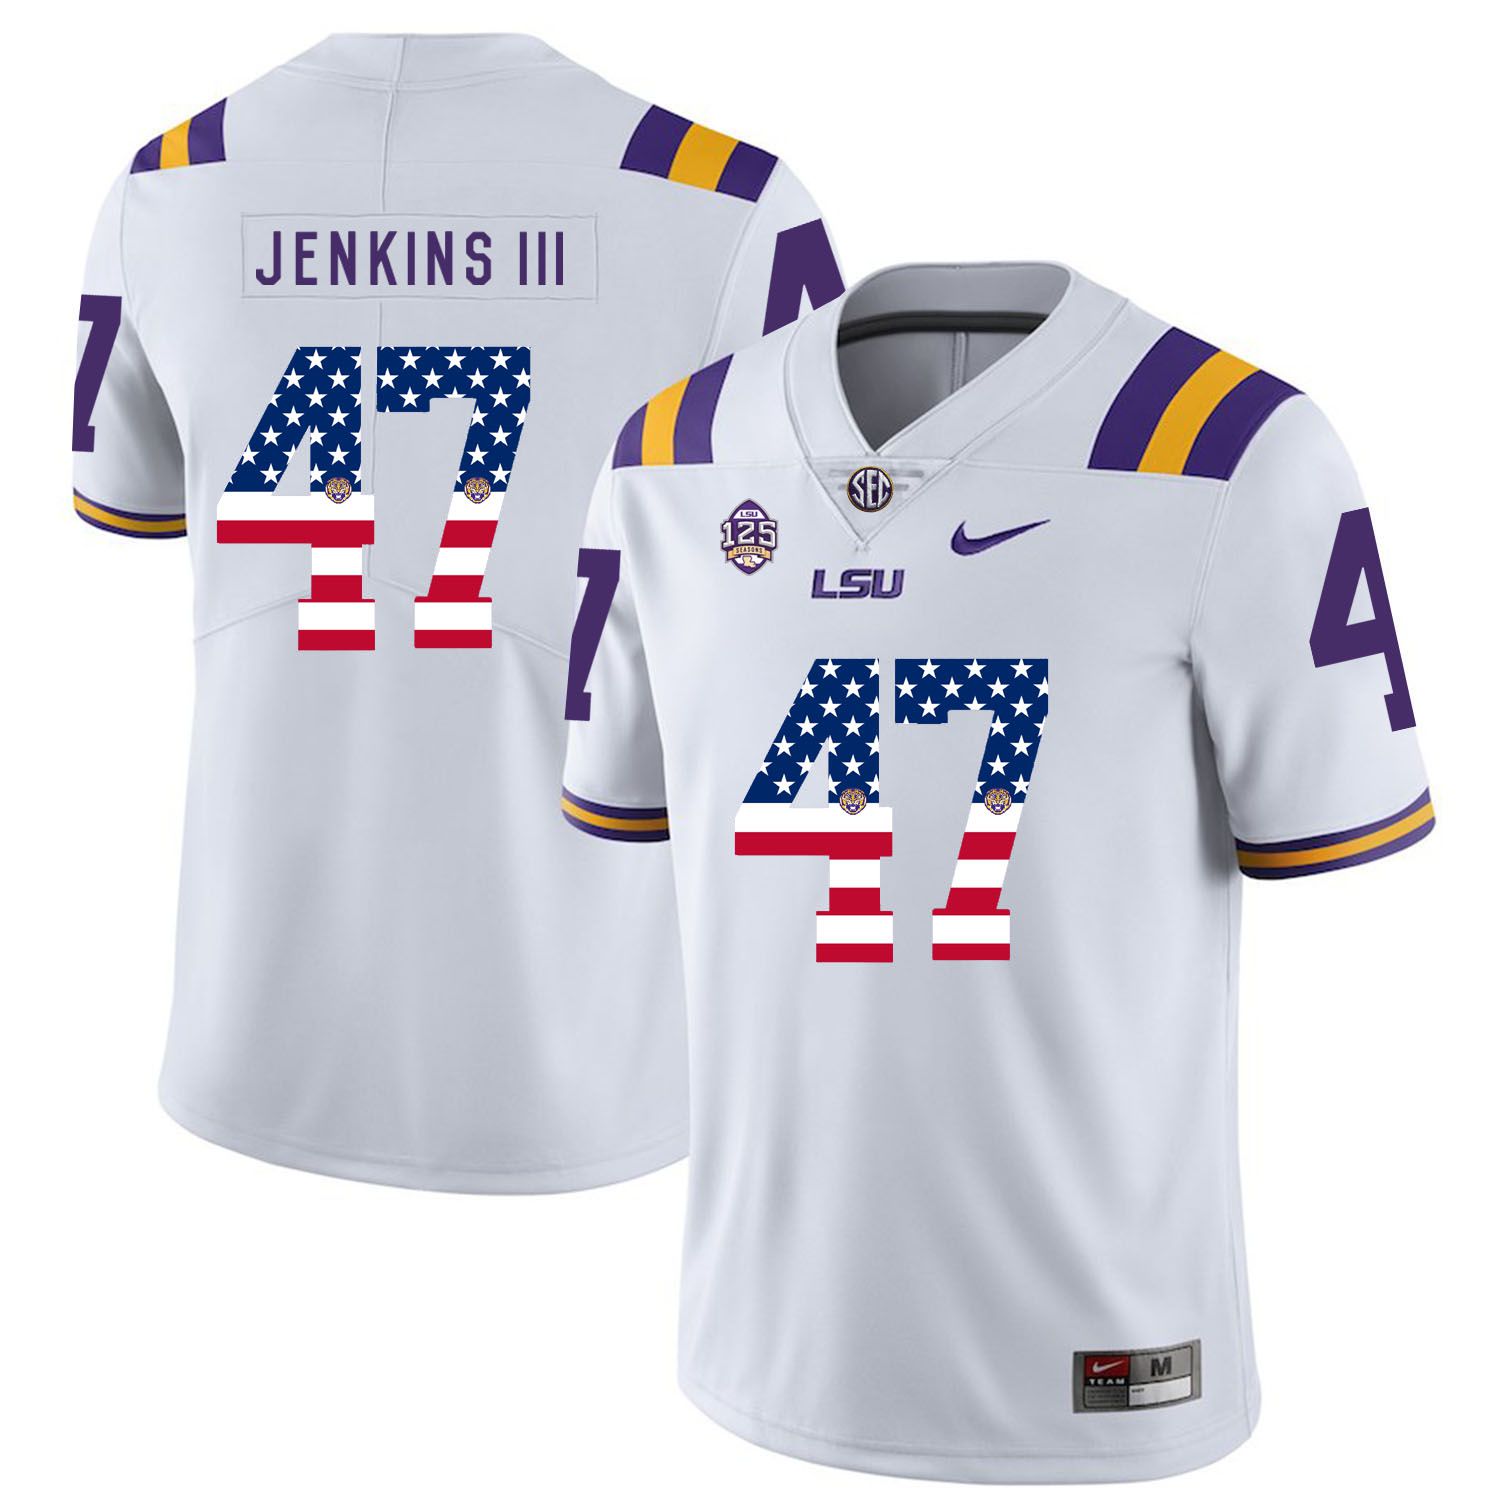 Men LSU Tigers 47 Jenkins iii White Flag Customized NCAA Jerseys